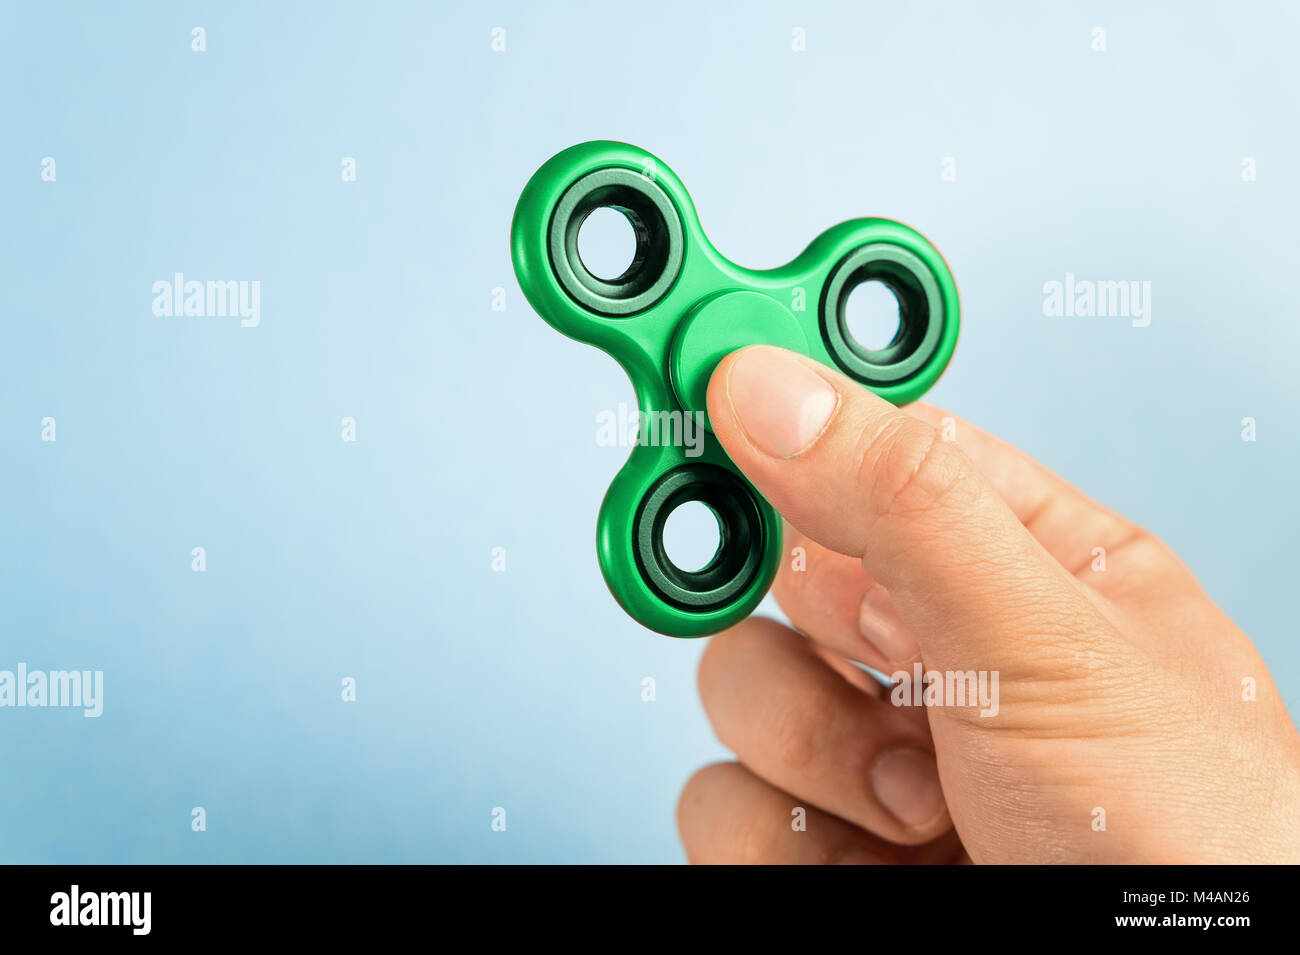 Fidget spinner between fingers against blue background. Stock Photo